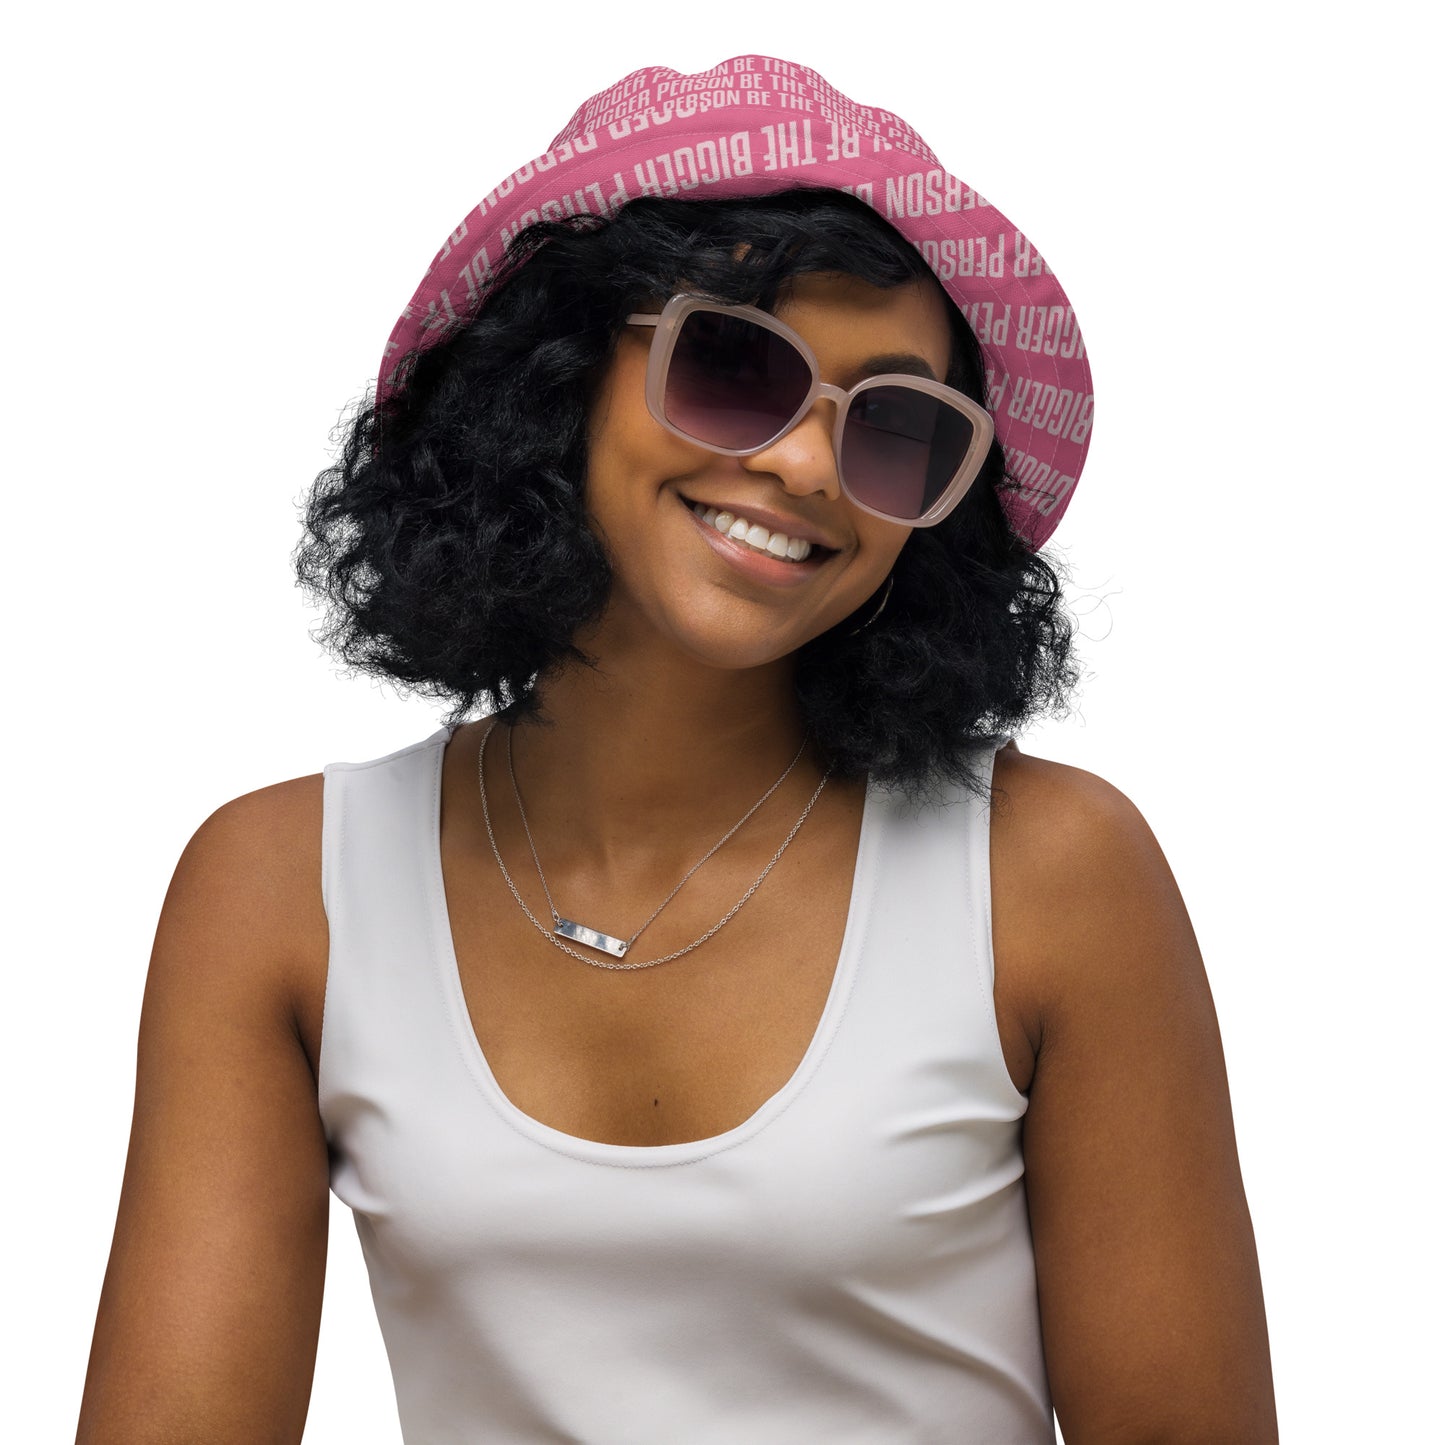 BLIND LOVE - Reversible Bucket Hat (pink/pink)